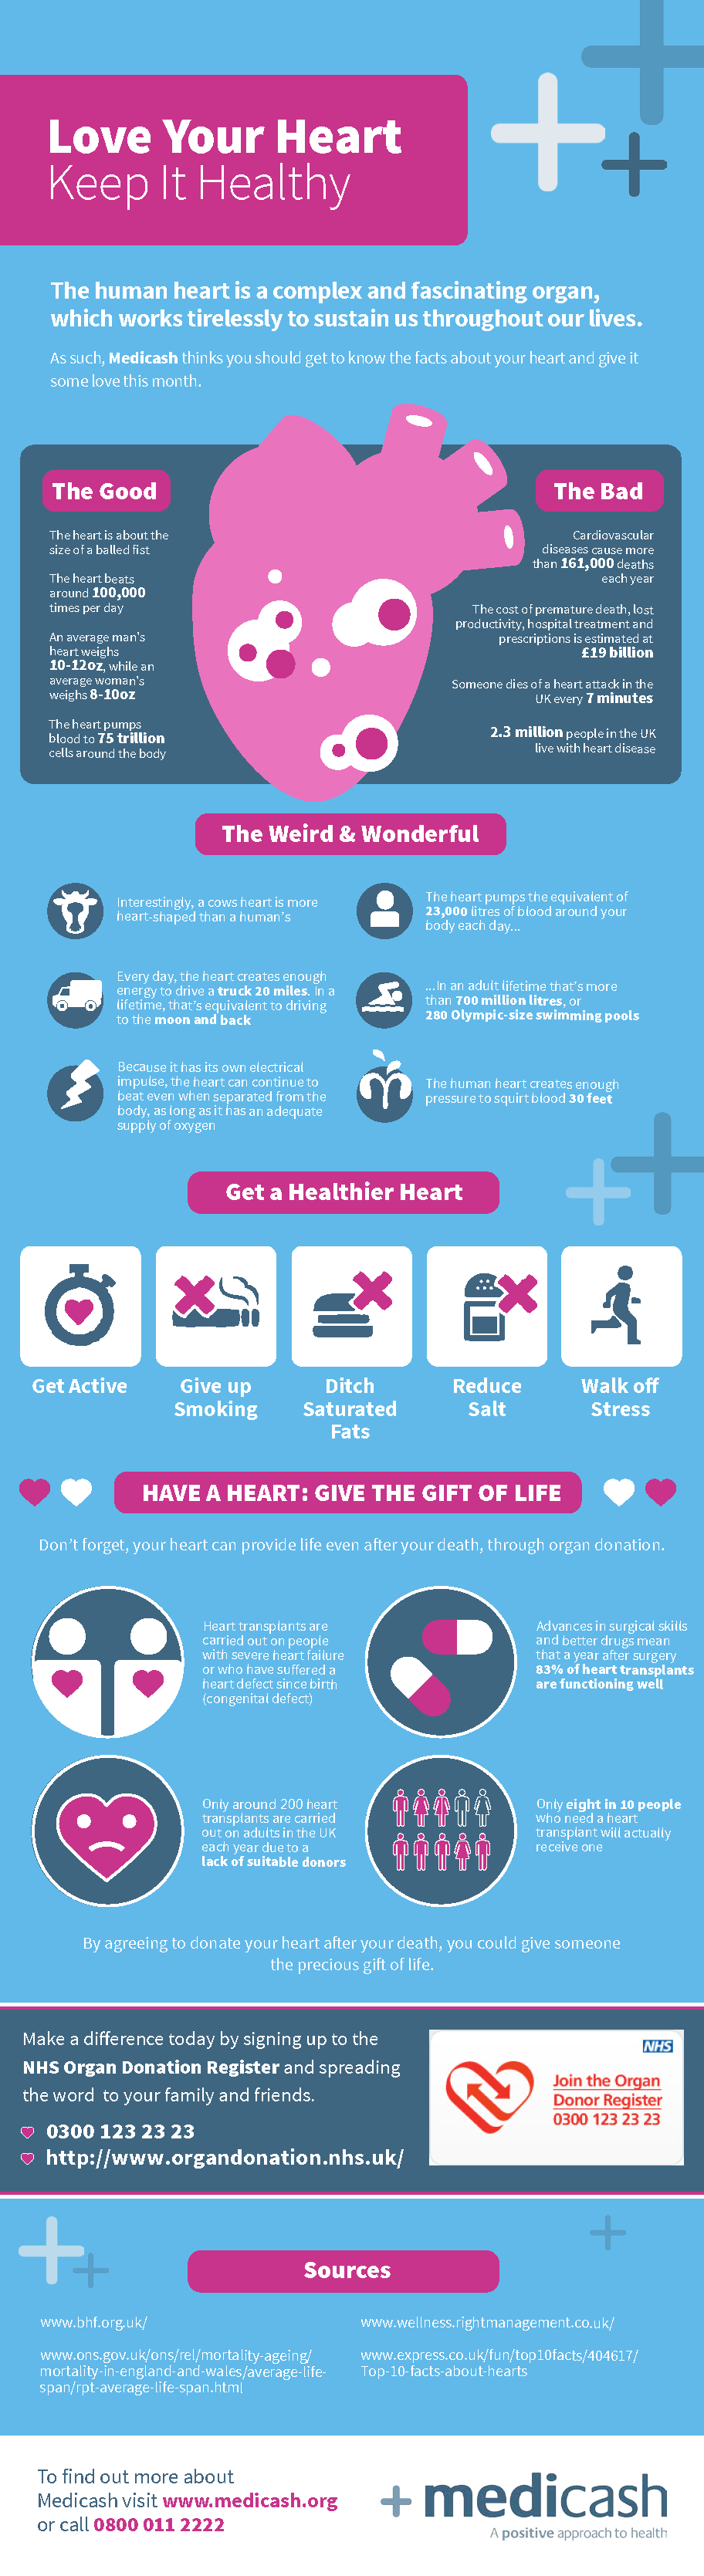 Medicash health heart infographic